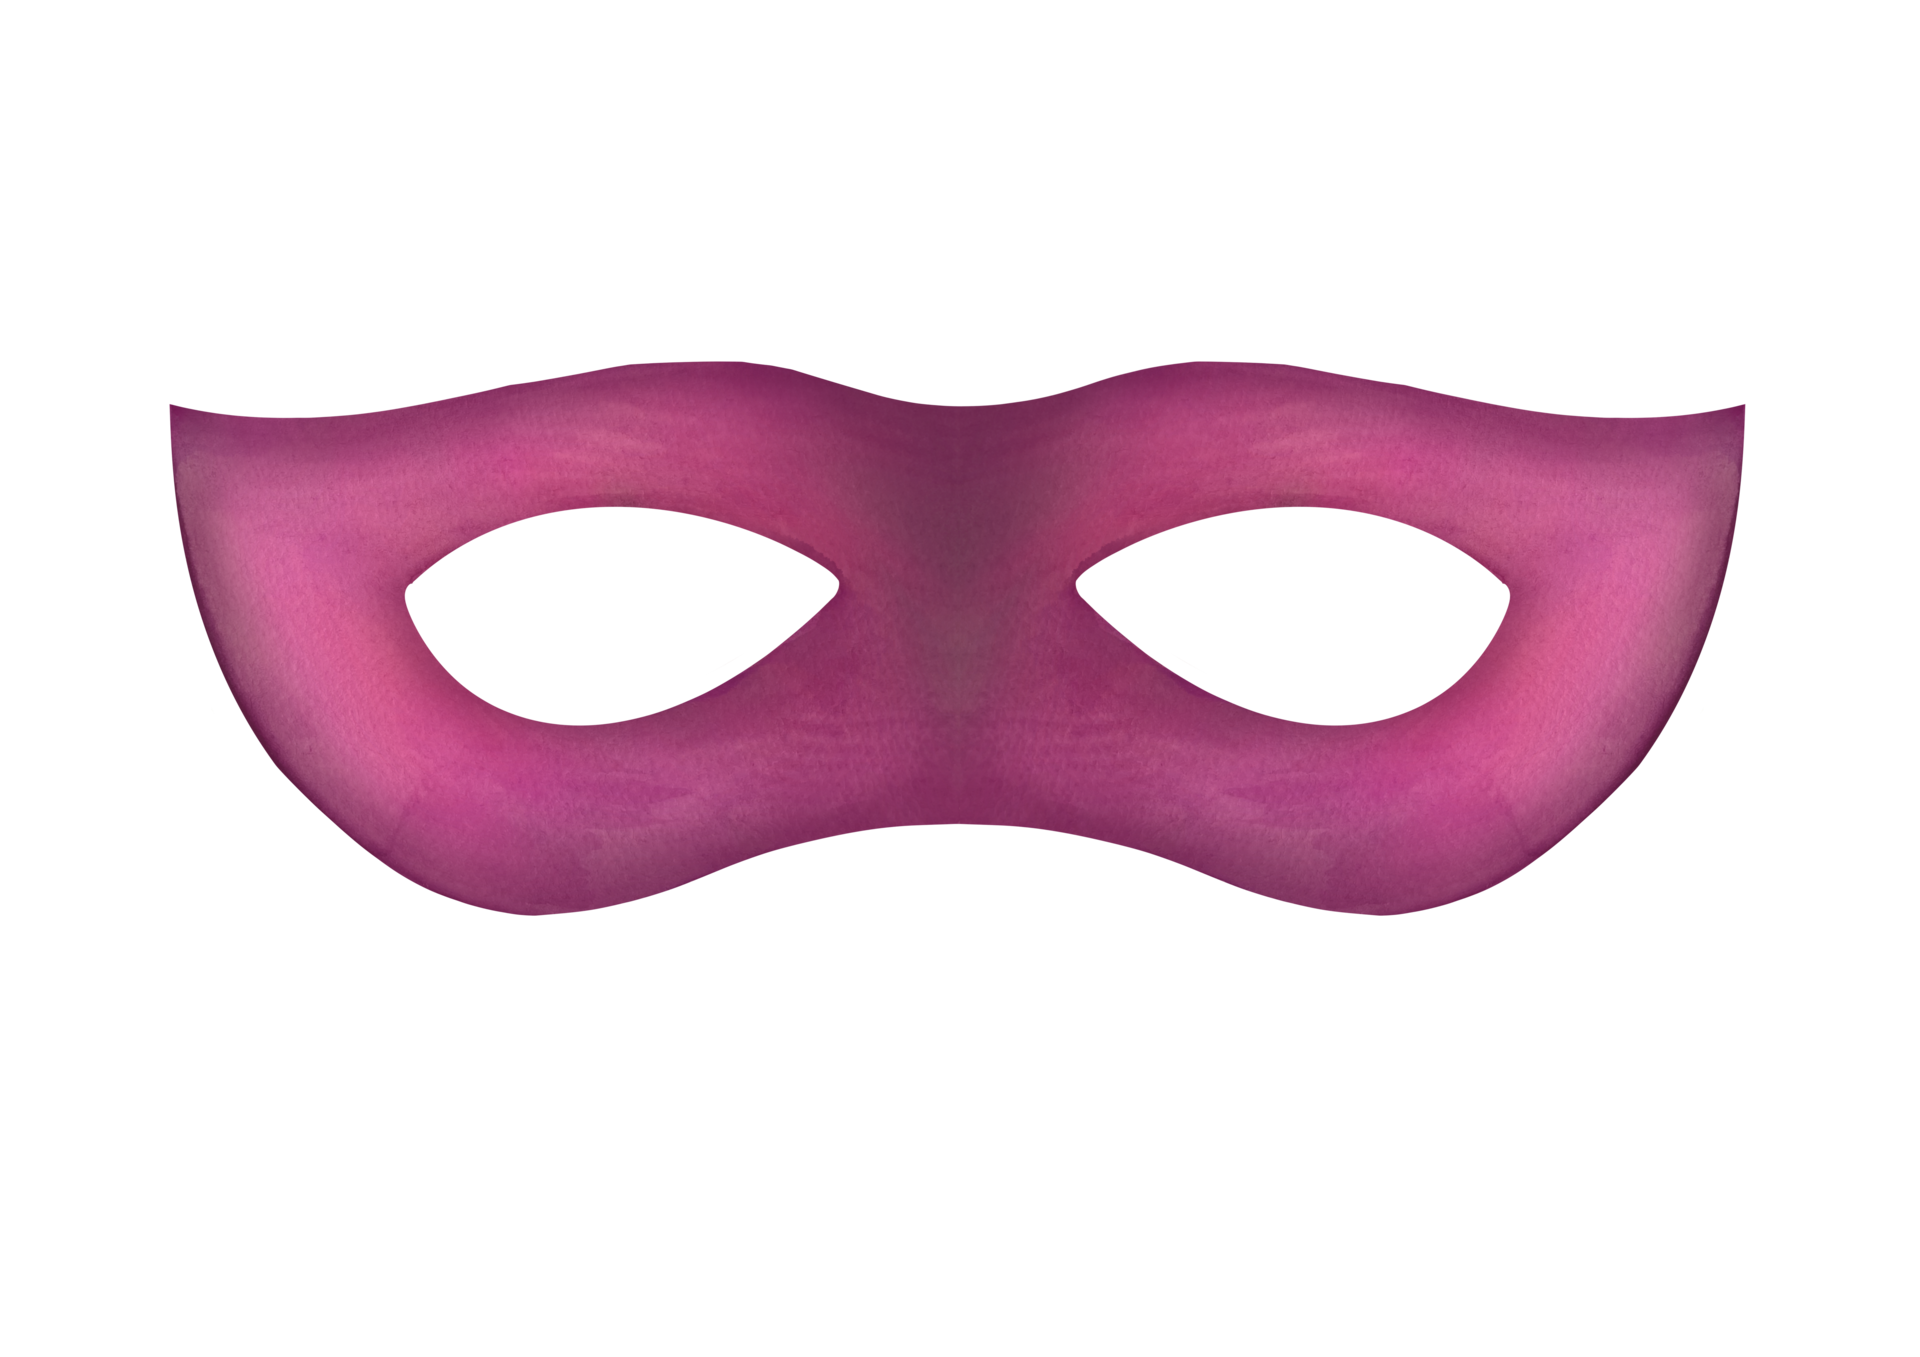 Premium Photo  Theatrical mask with indistinguishable emotion art  masquerade